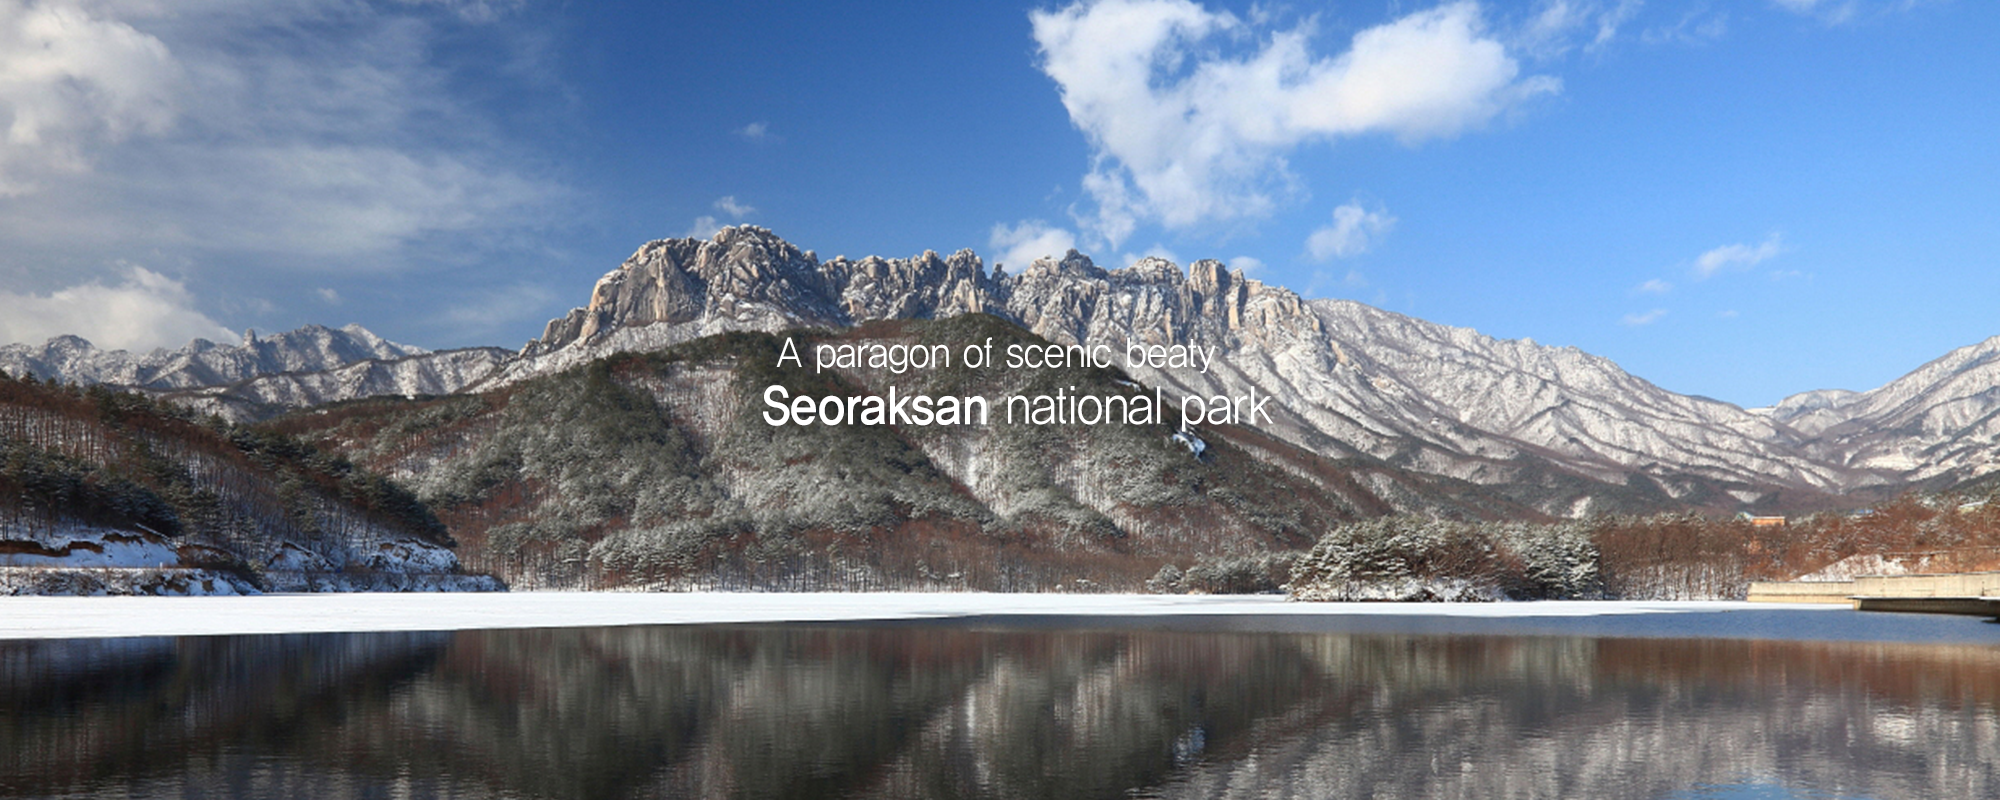 A paragon of scenic beaty - Seoraksan national pa